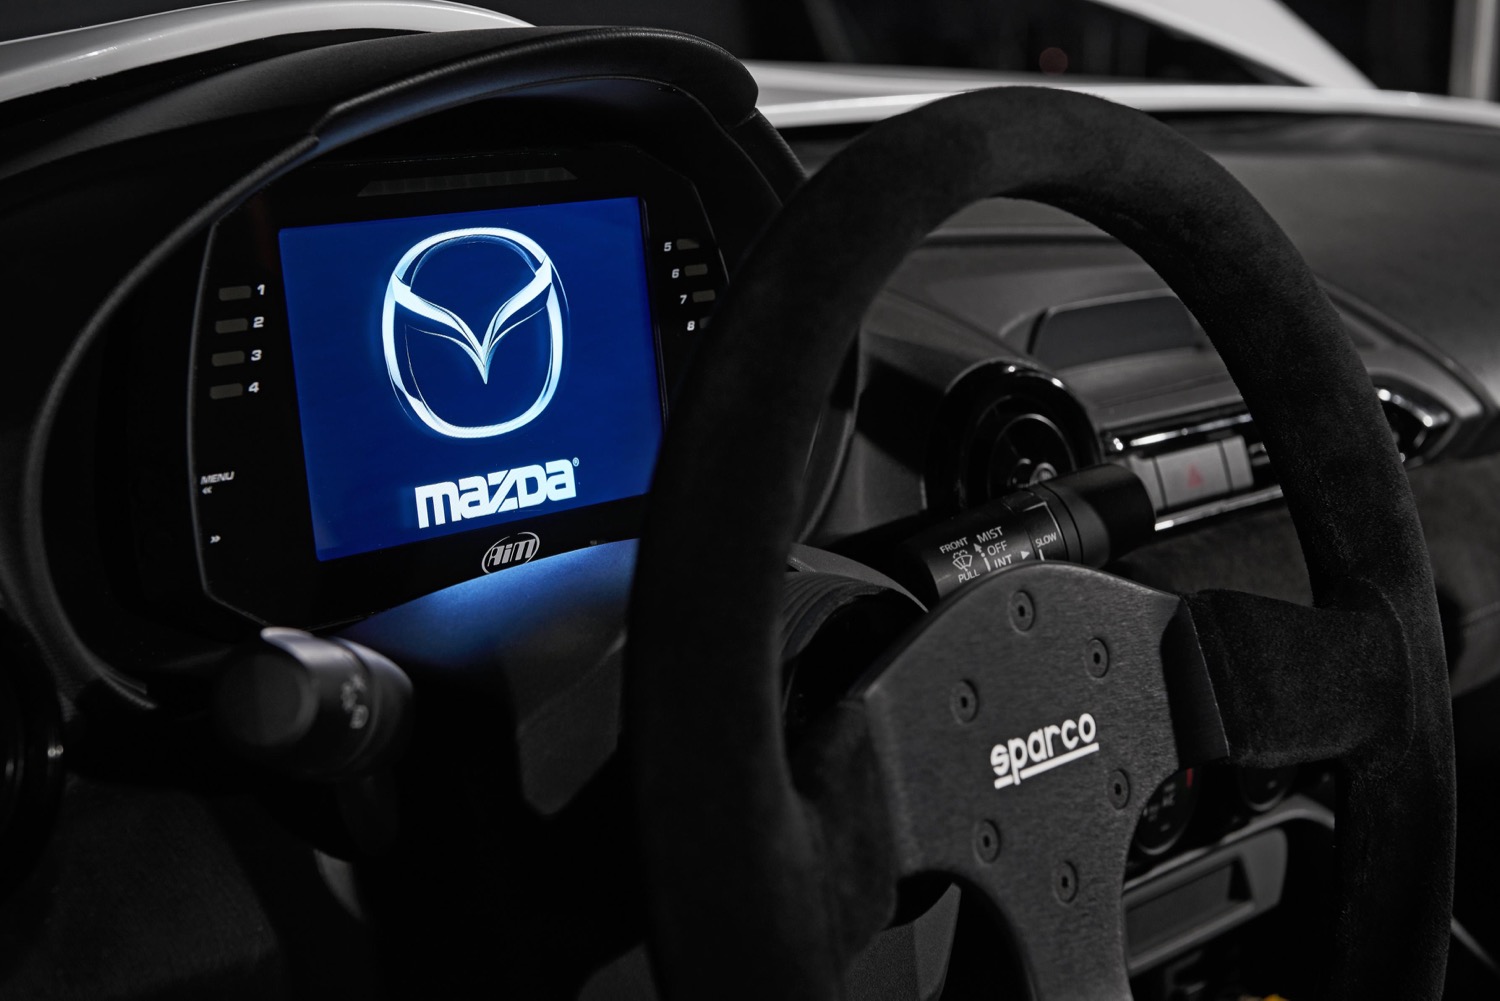 Mazda MX-5 Miata RF Kuro concept